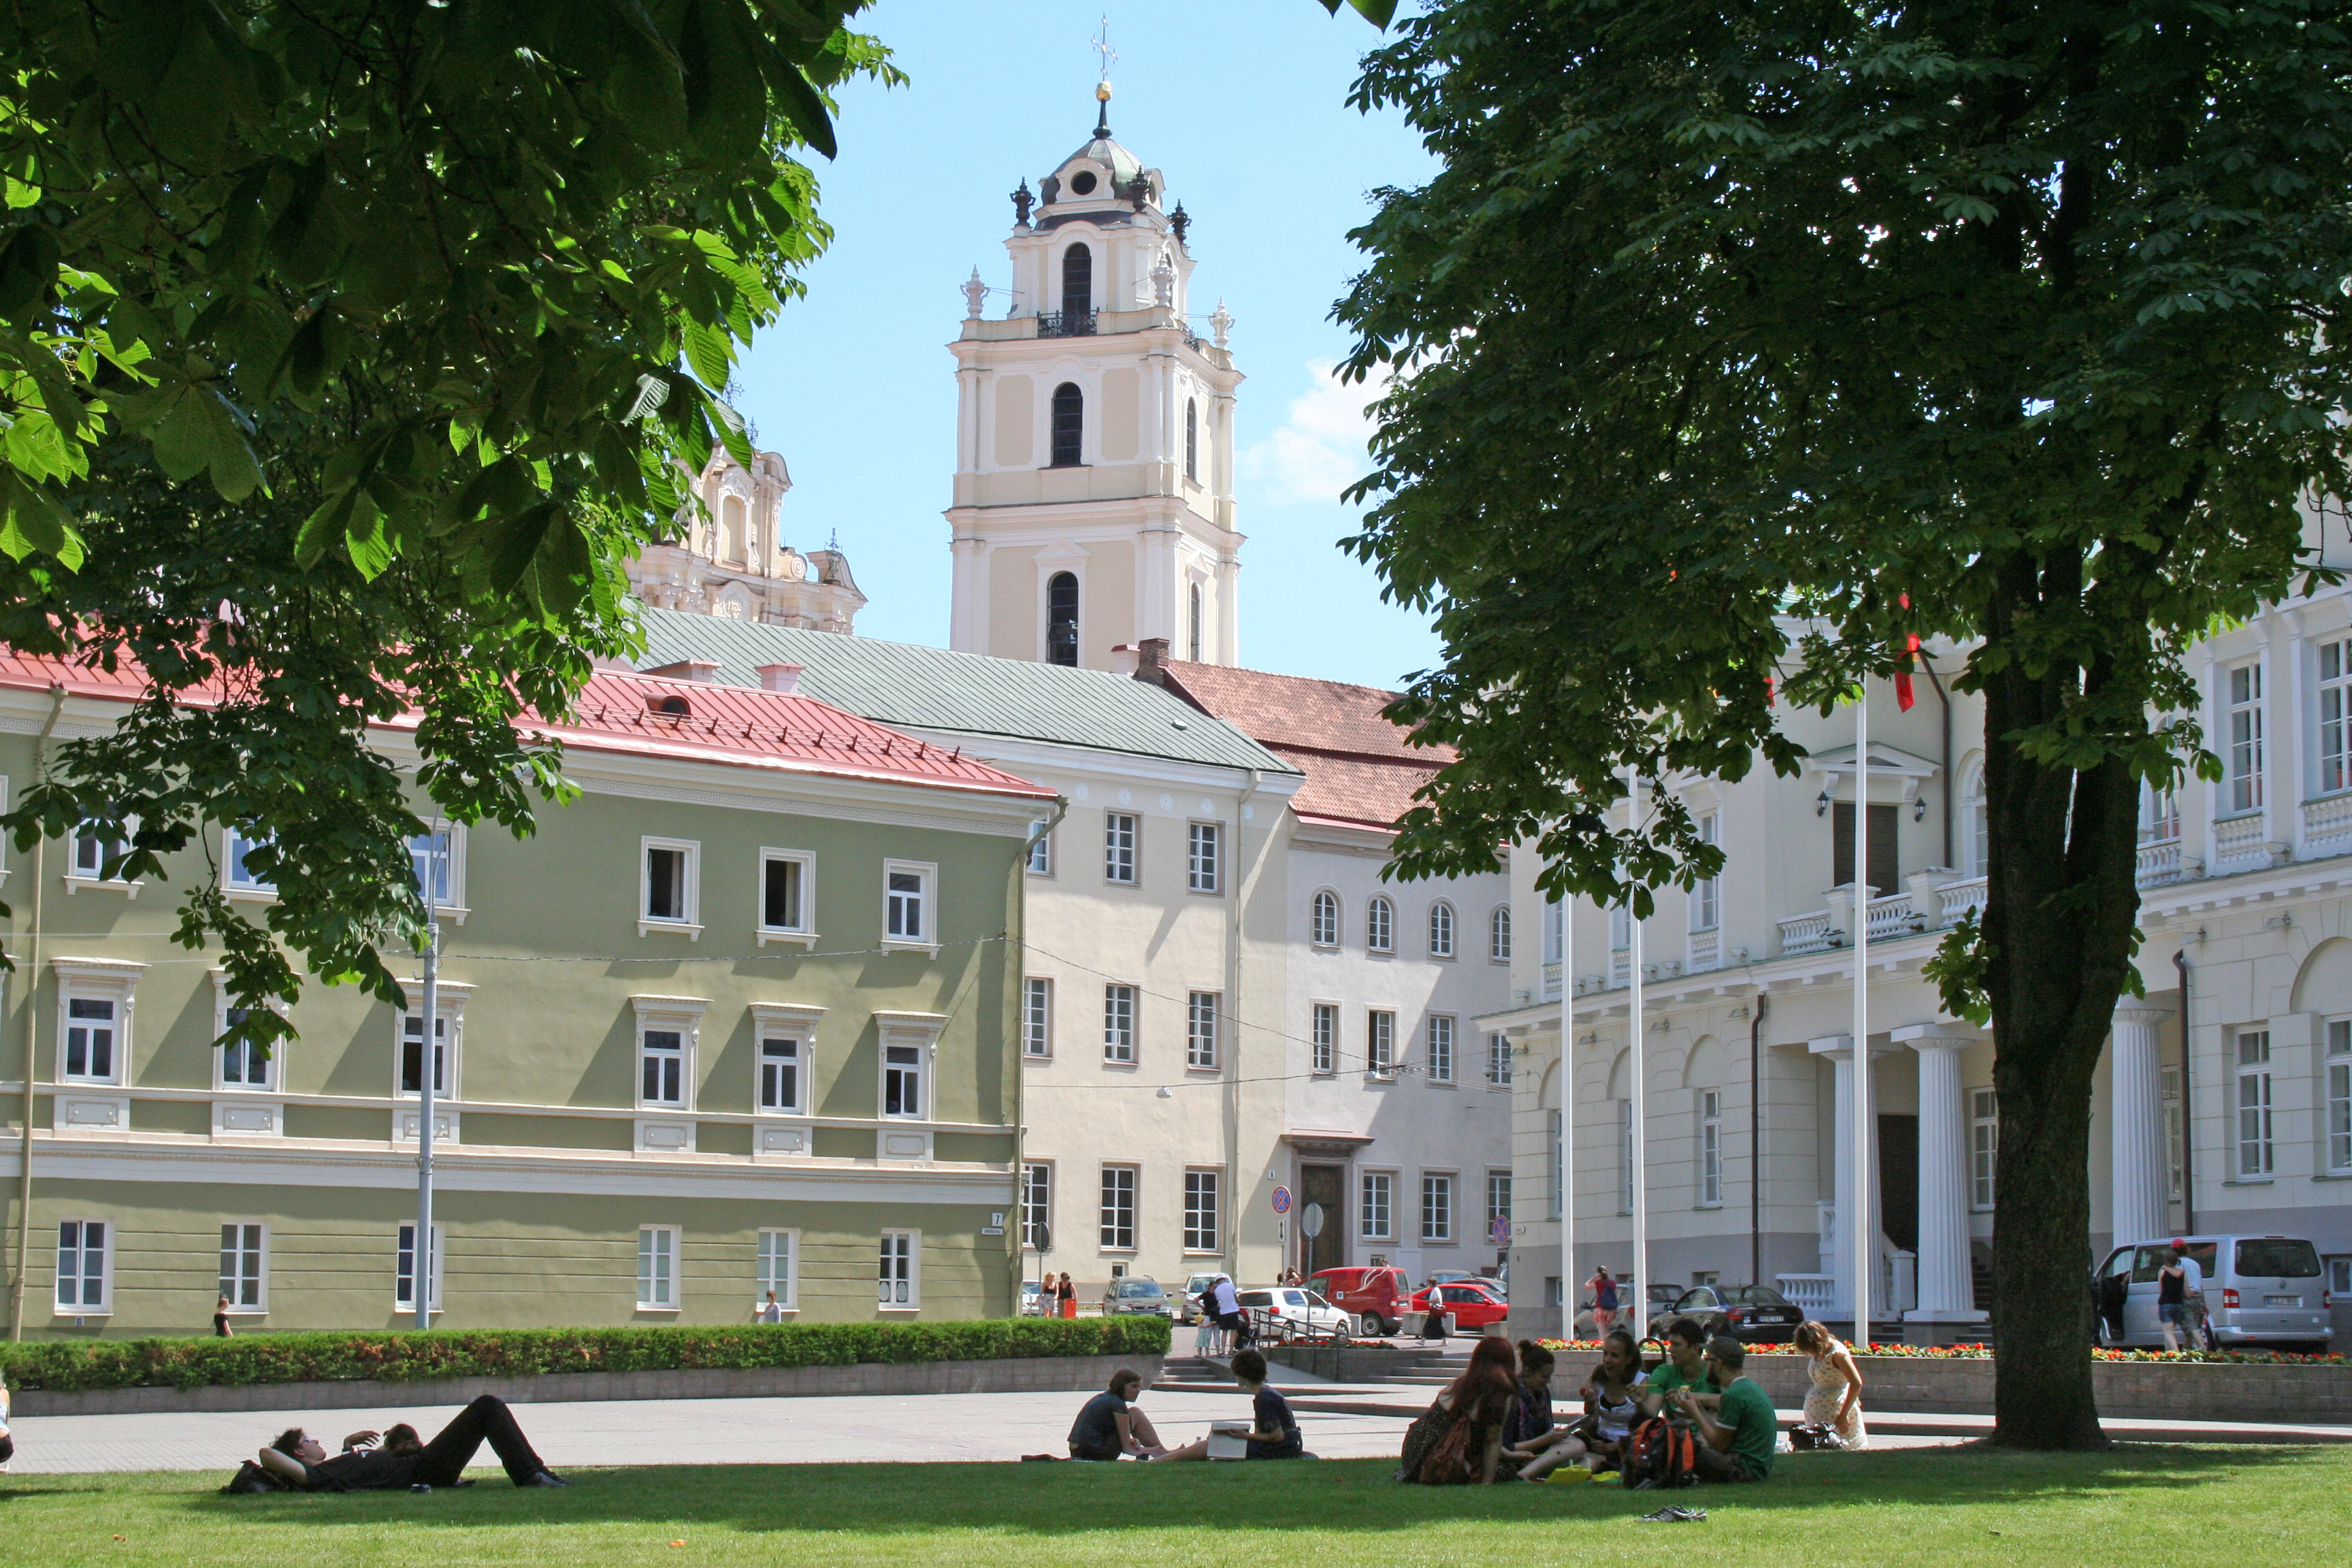 Daukantas square near Vilnius University